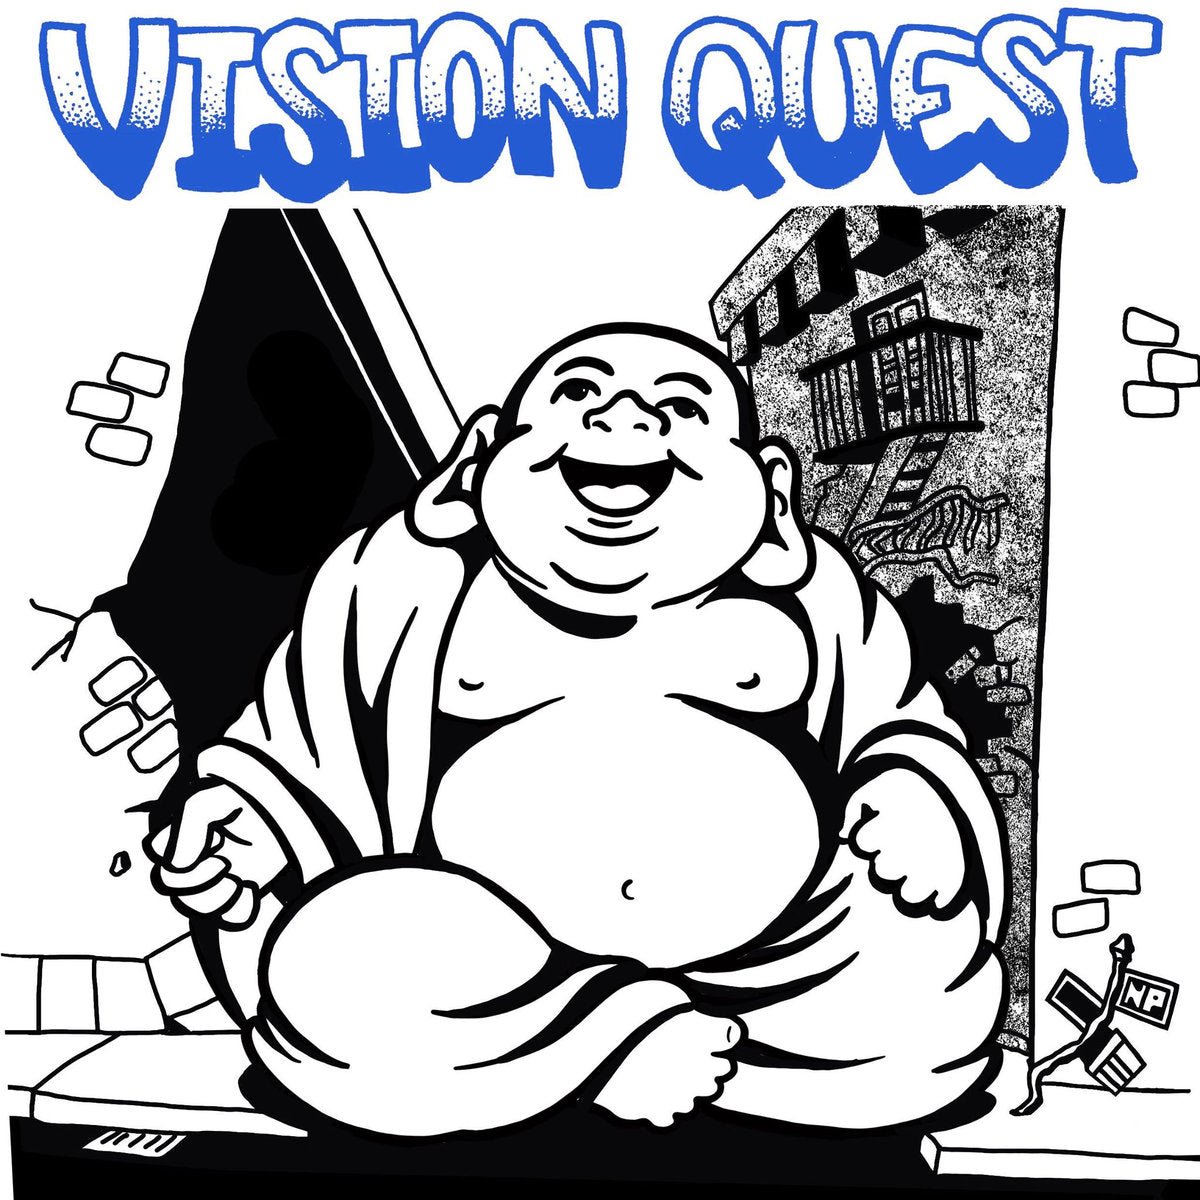 Vision Quest - Still Real b/w Vision Quest 7" - Vinyl - Crew Cuts